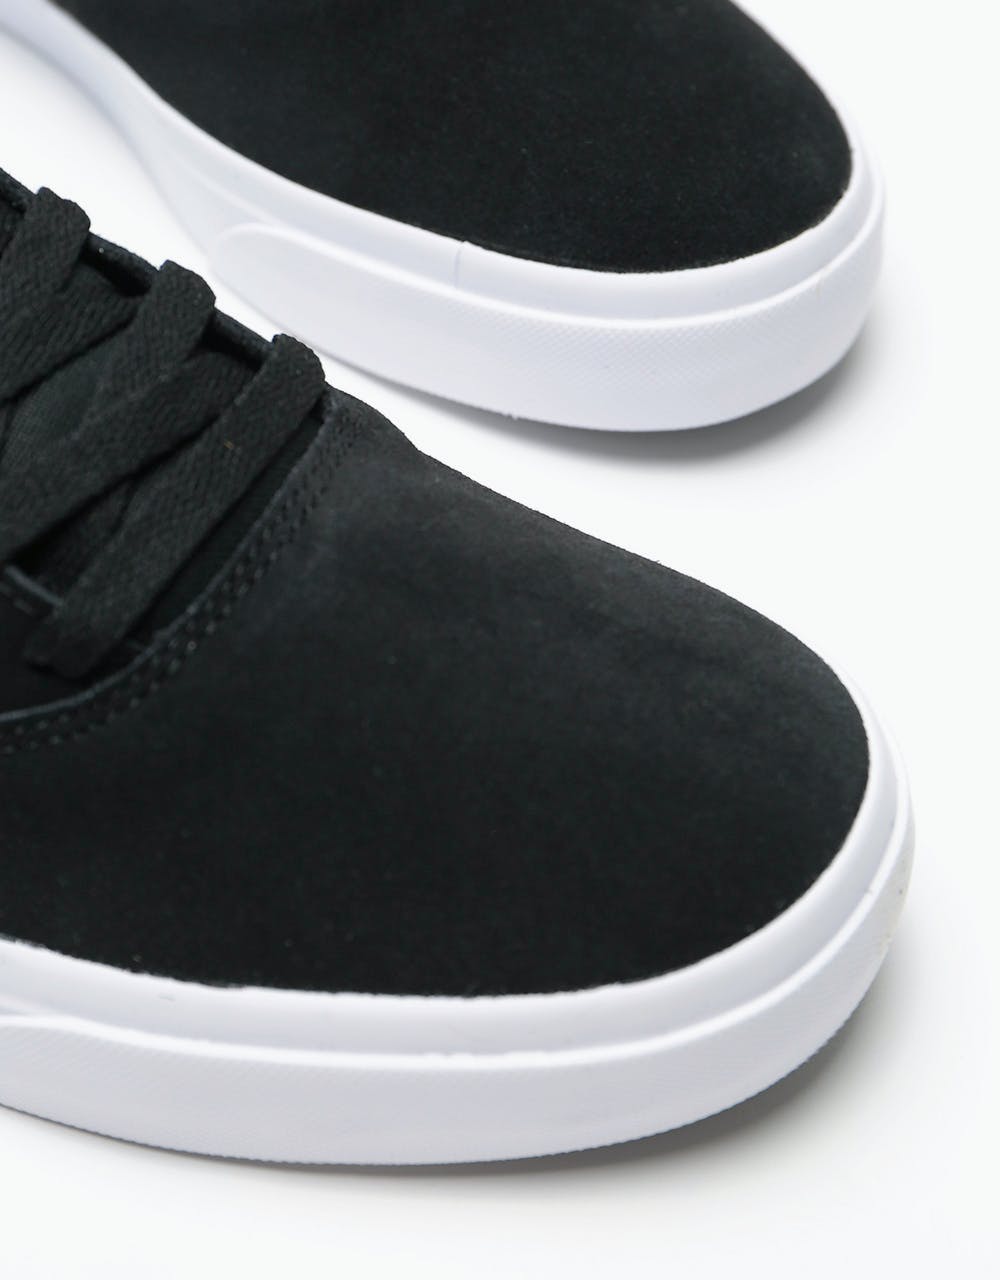 Nike SB Charge Suede Skate Shoes - Black/White-Black